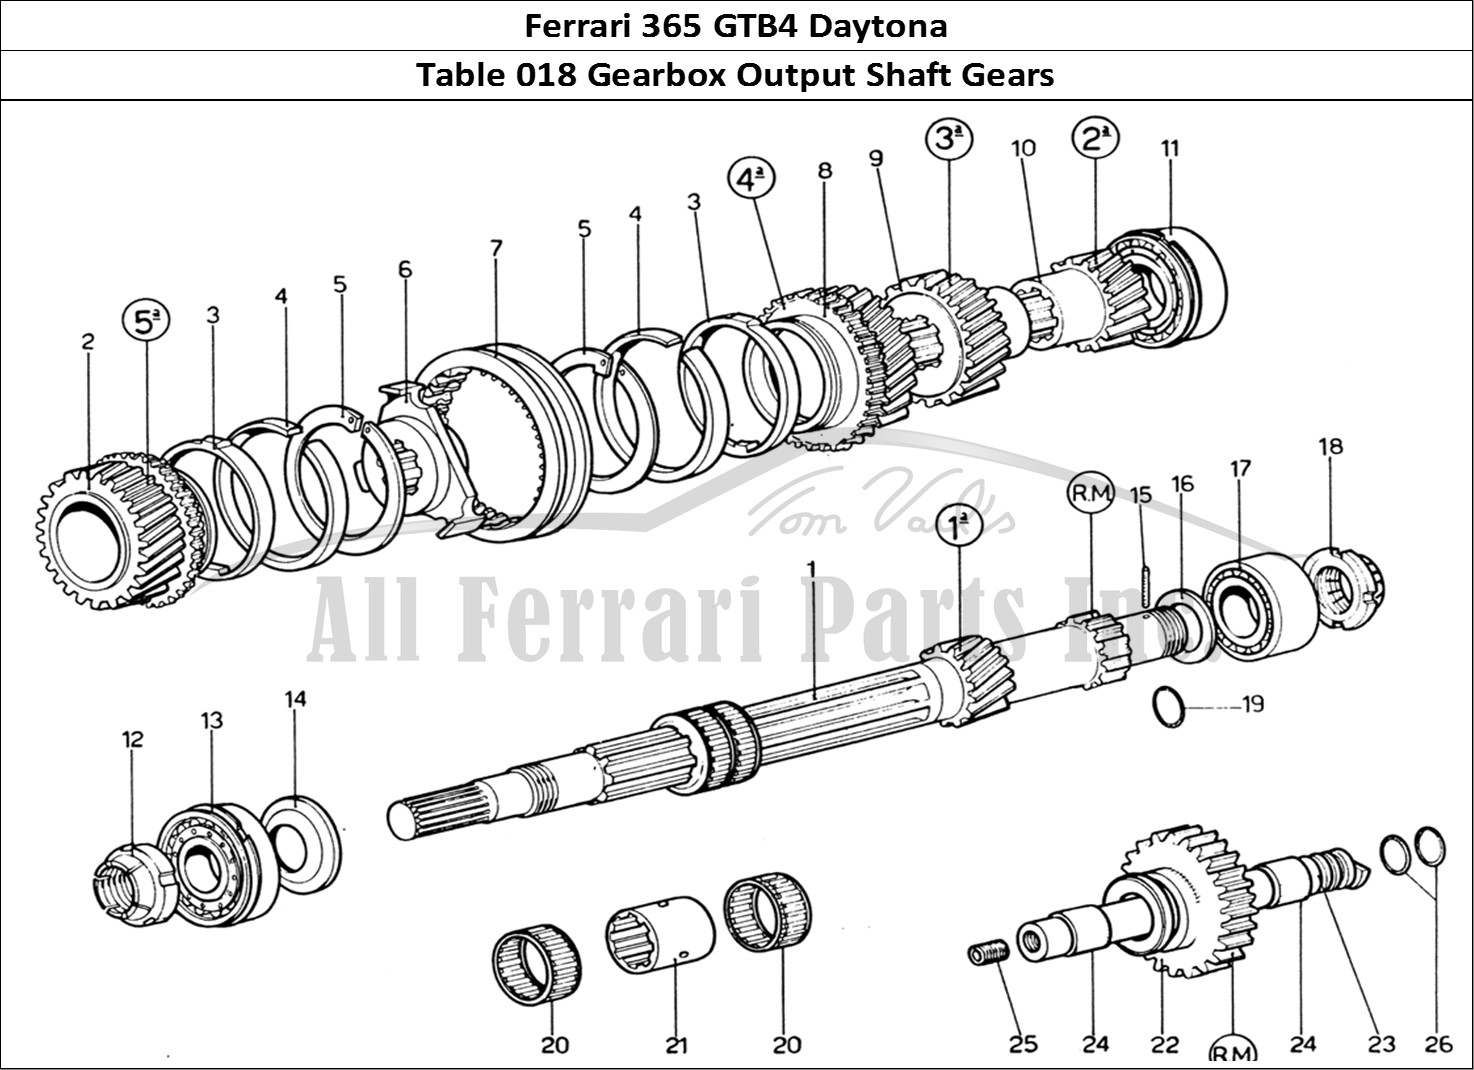 Ferrari Parts Ferrari 365 GTB4 Daytona (1969) Page 018 Output Shaft Gears